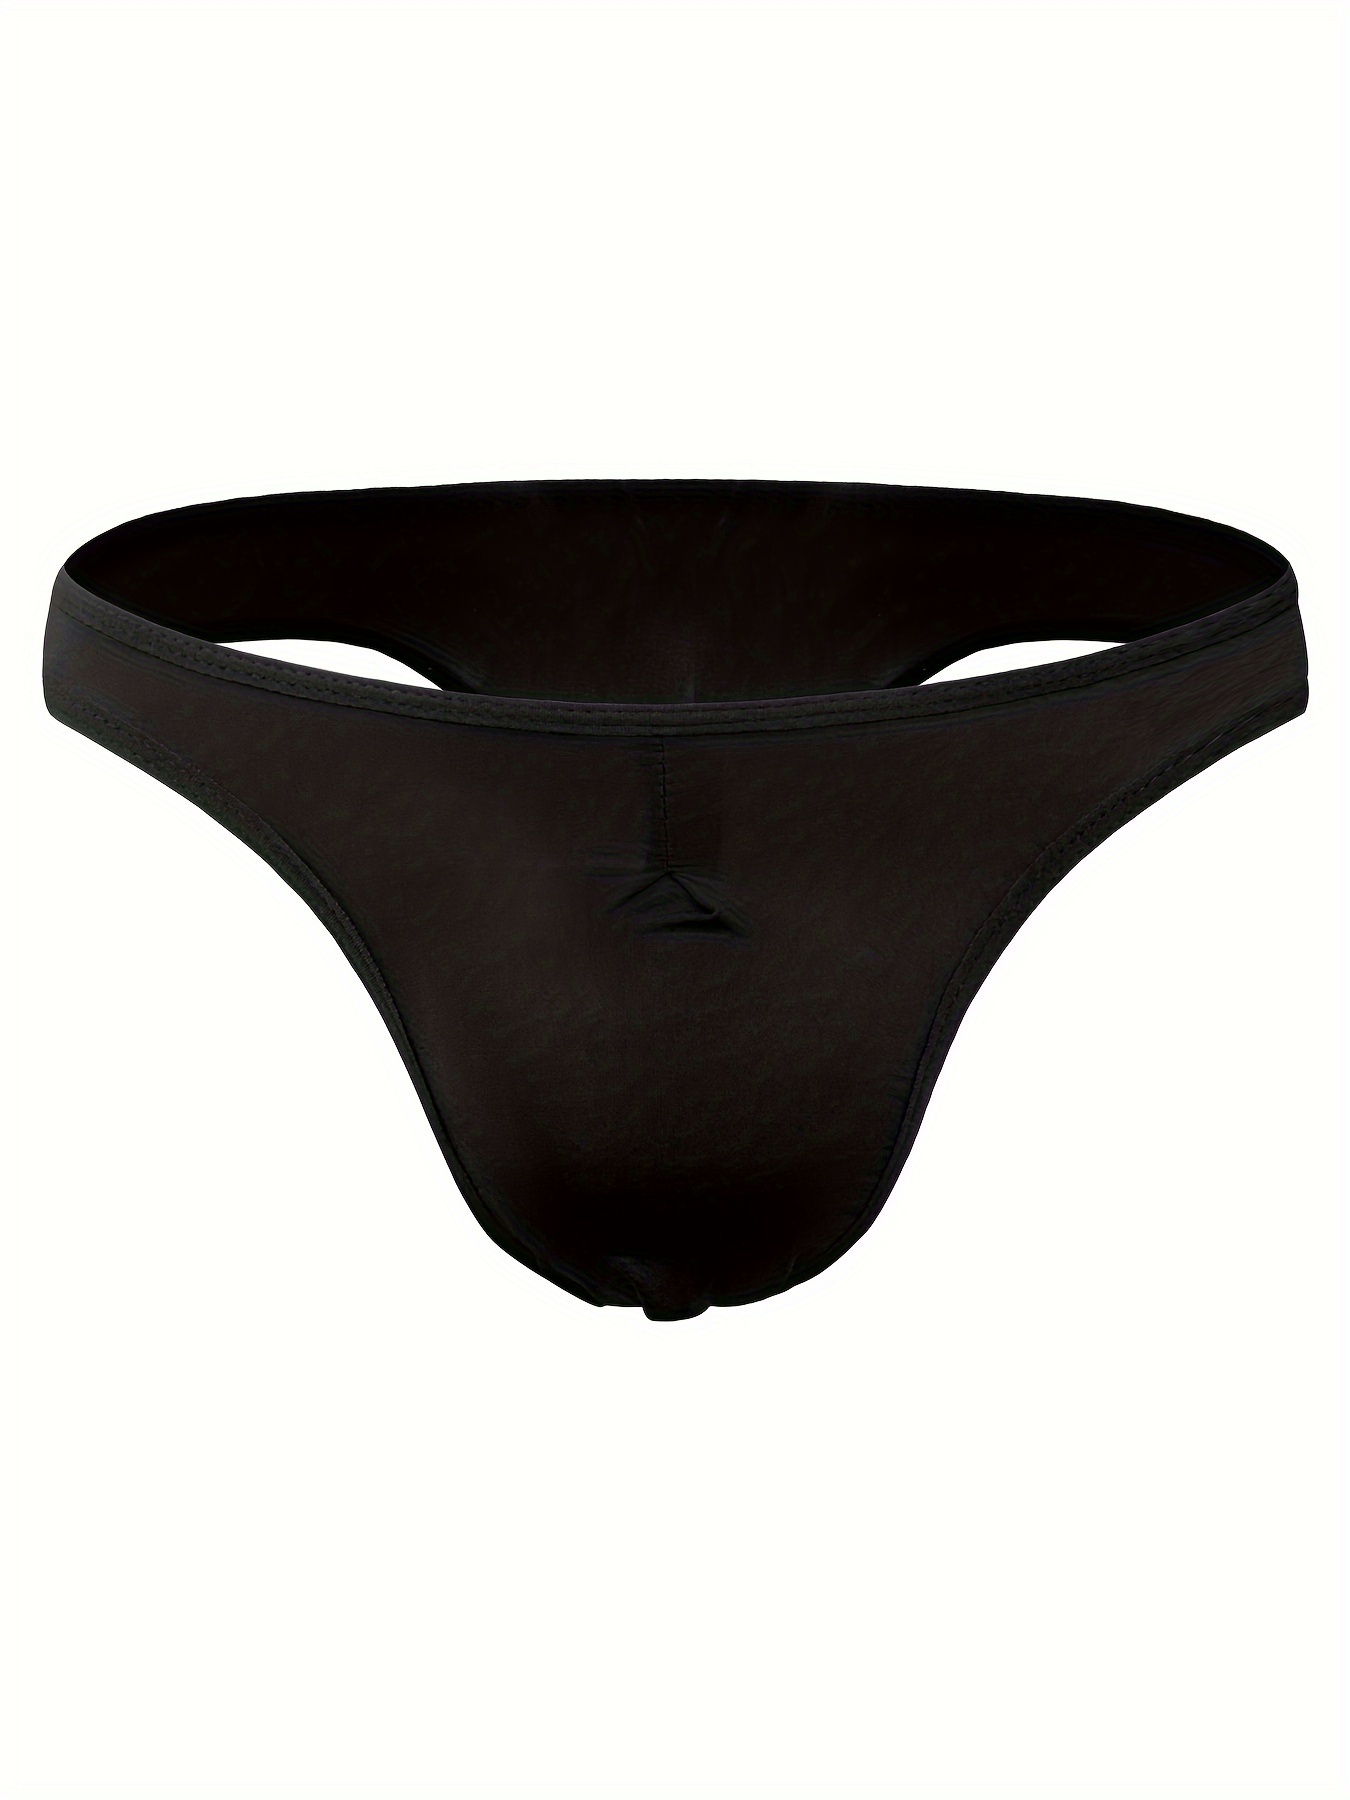 QAZXD Men's Underwear Ice Silk Mesh Breathable Thongs Buy 2 Get 1 Free（Dark  Gray，M）